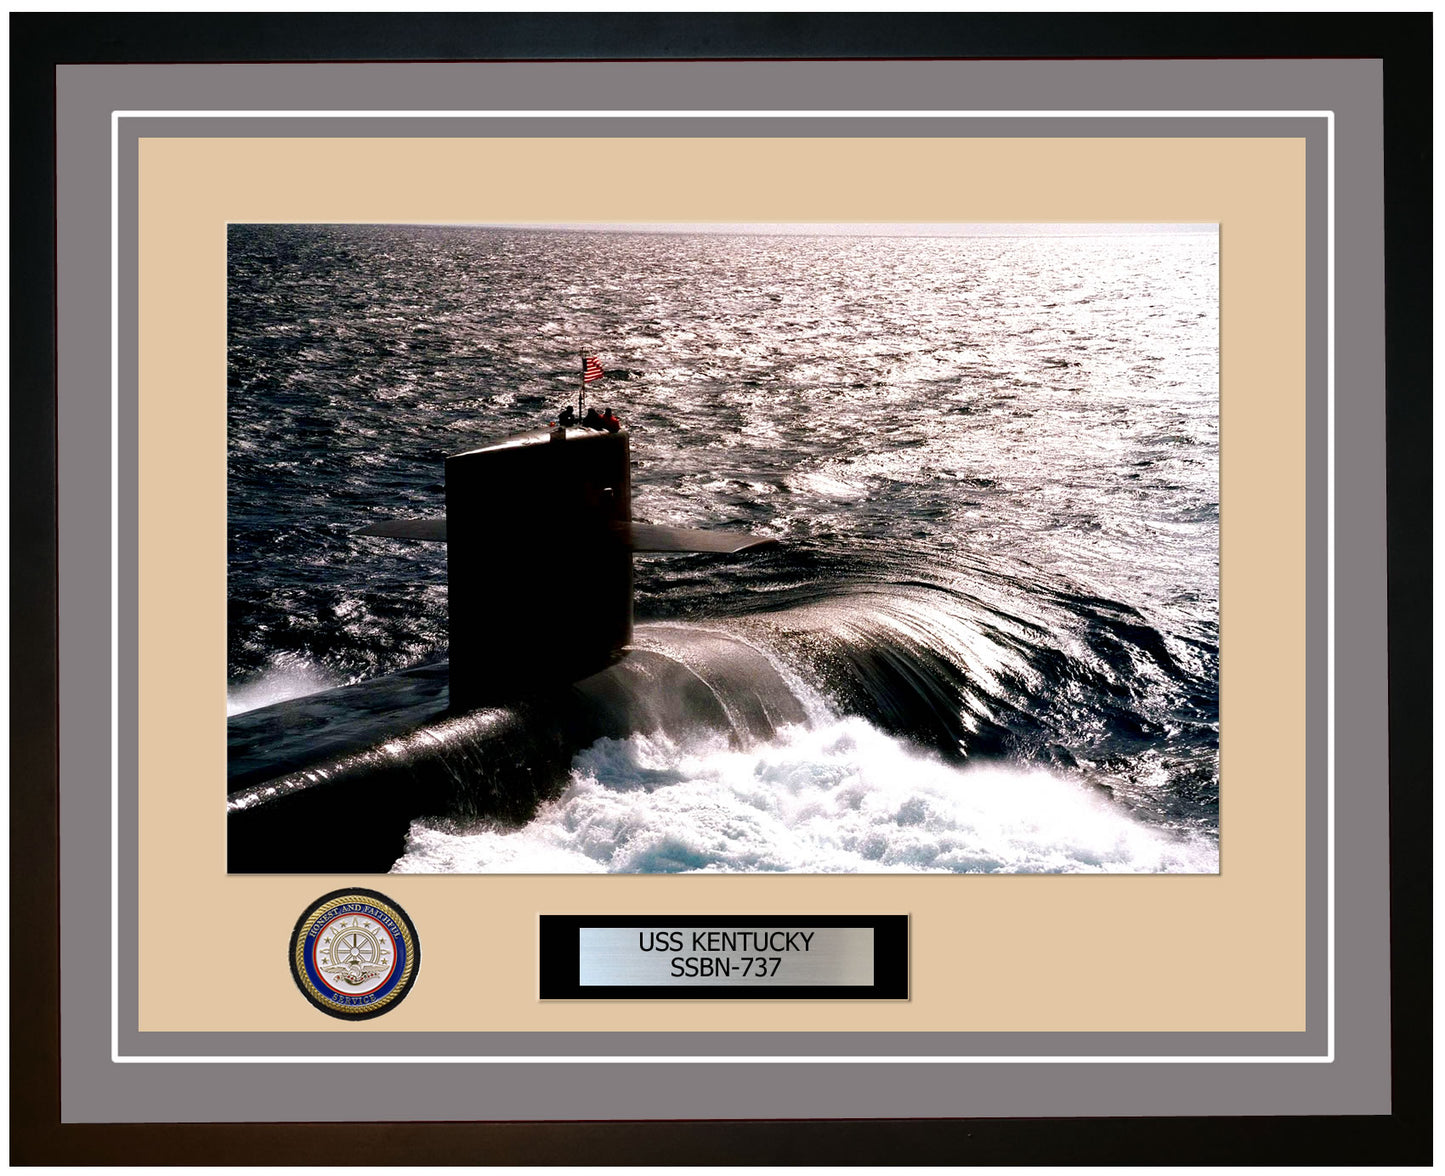 USS Kentucky SSBN-737 Framed Navy Ship Photo Grey